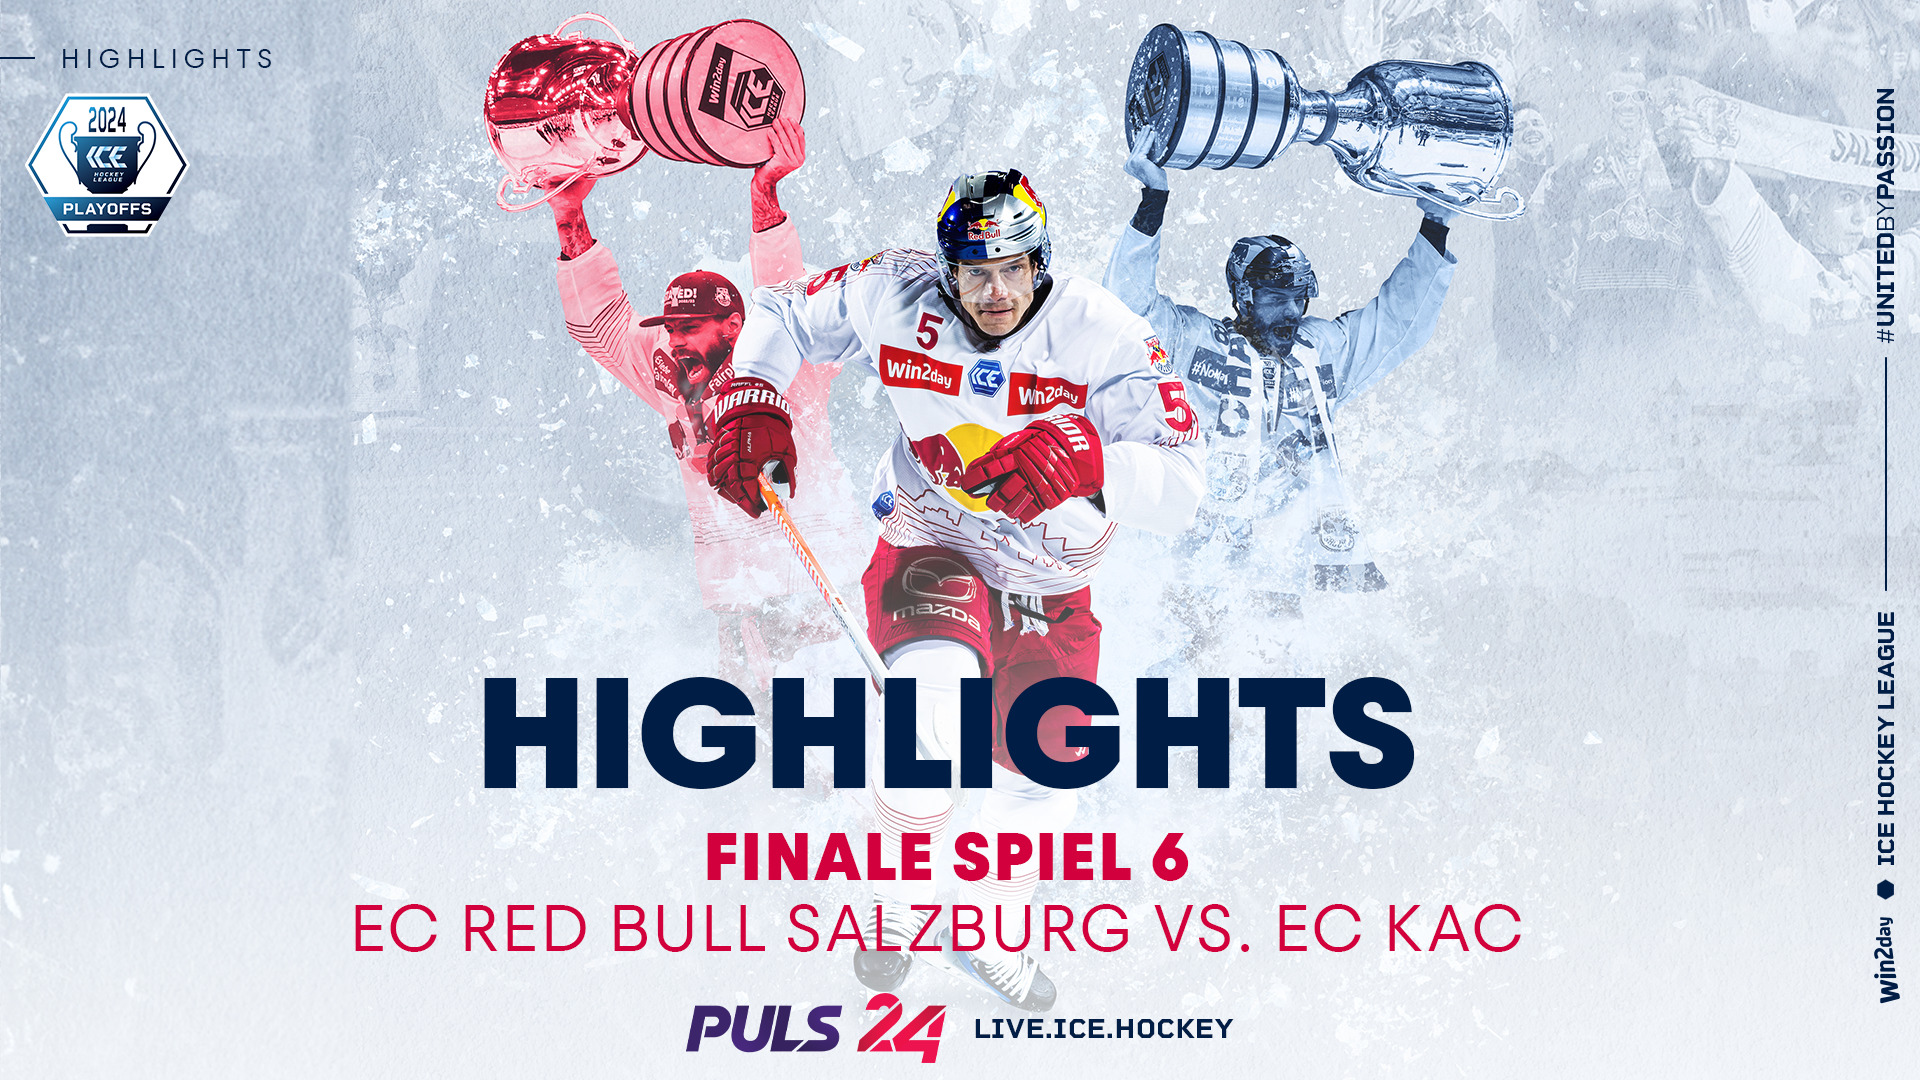 Highlights Finale 6: EC Red Bull Salzburg vs. EC KAC